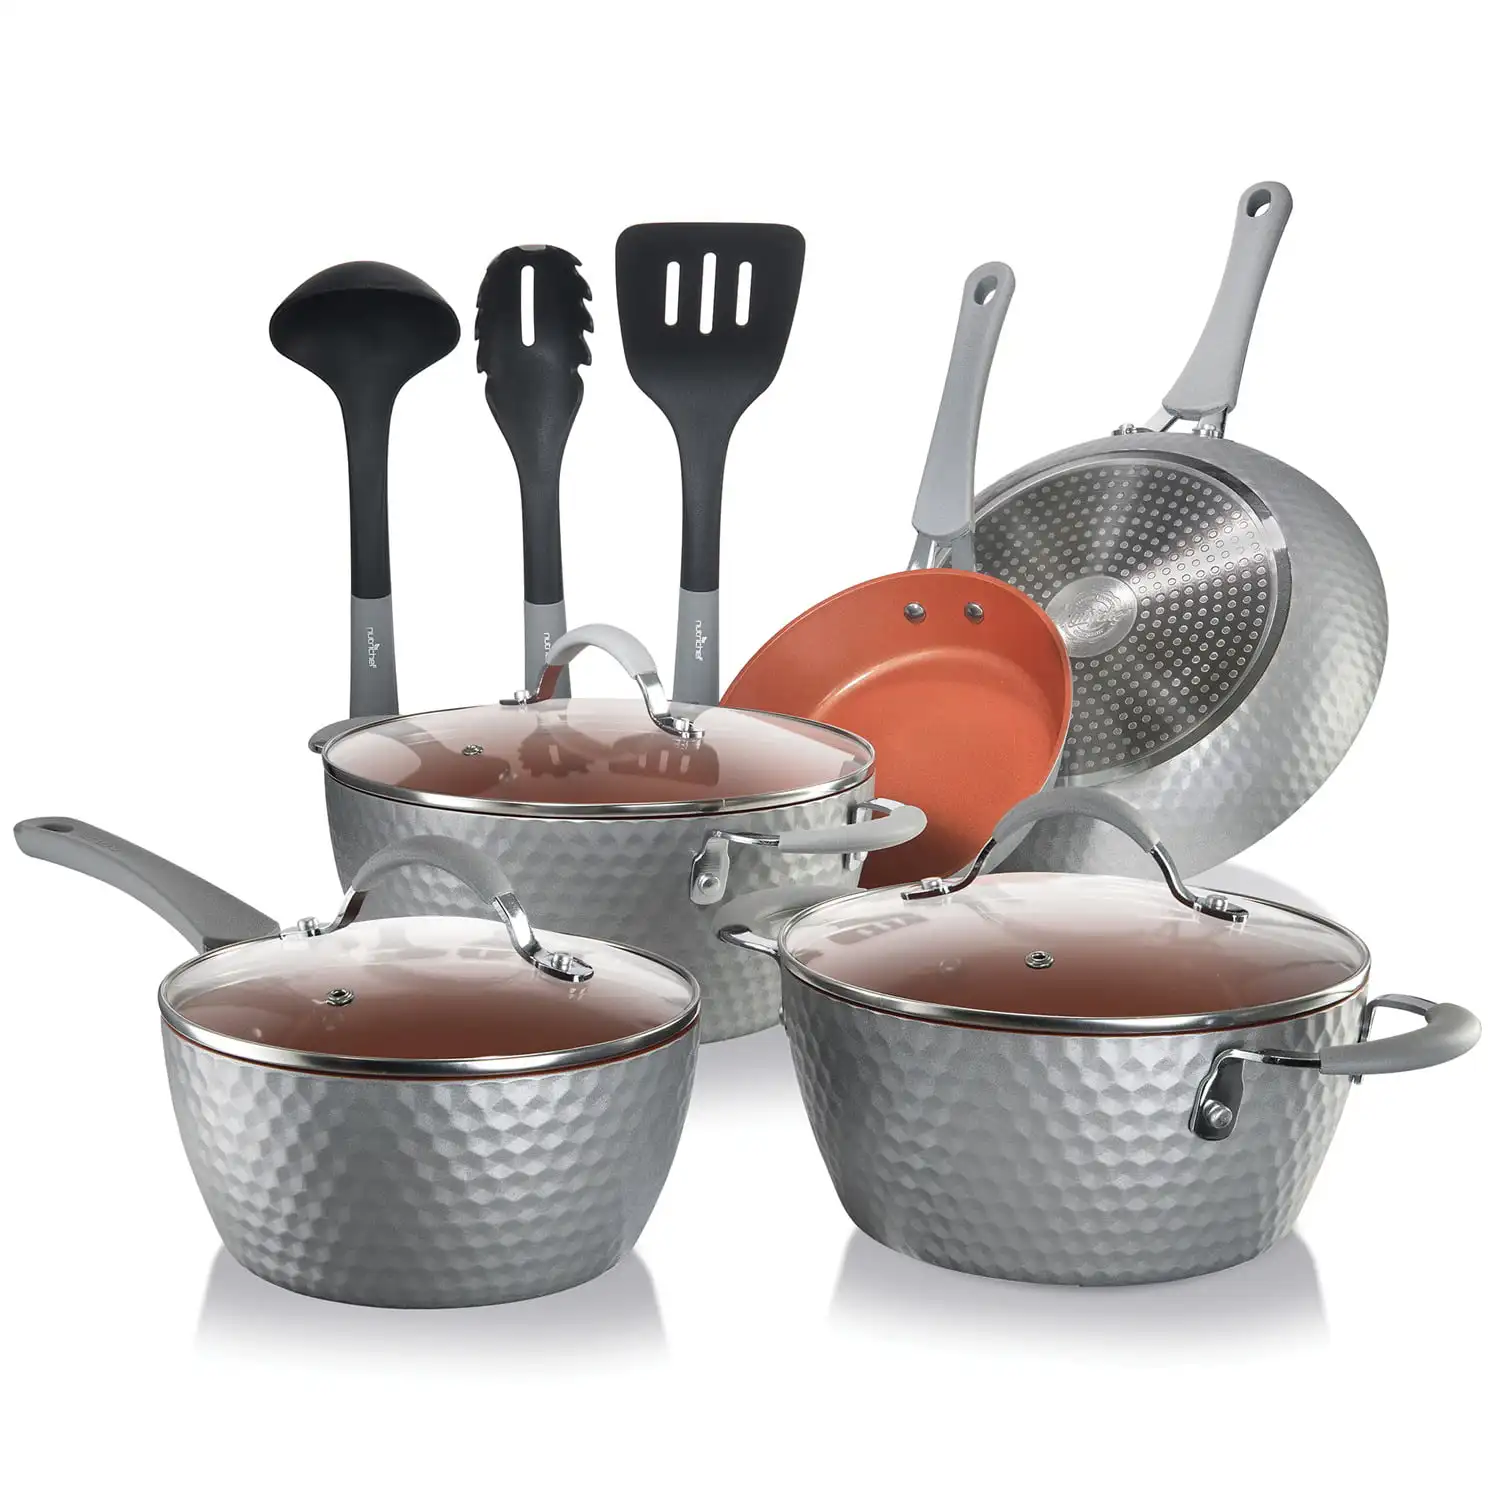 

NutriChef Nonstick Cookware Excilon Home Kitchen Ware Pots & Pan Set with Saucepan Frying Pans, Cooking Pots, Lids, Utensil PTFE